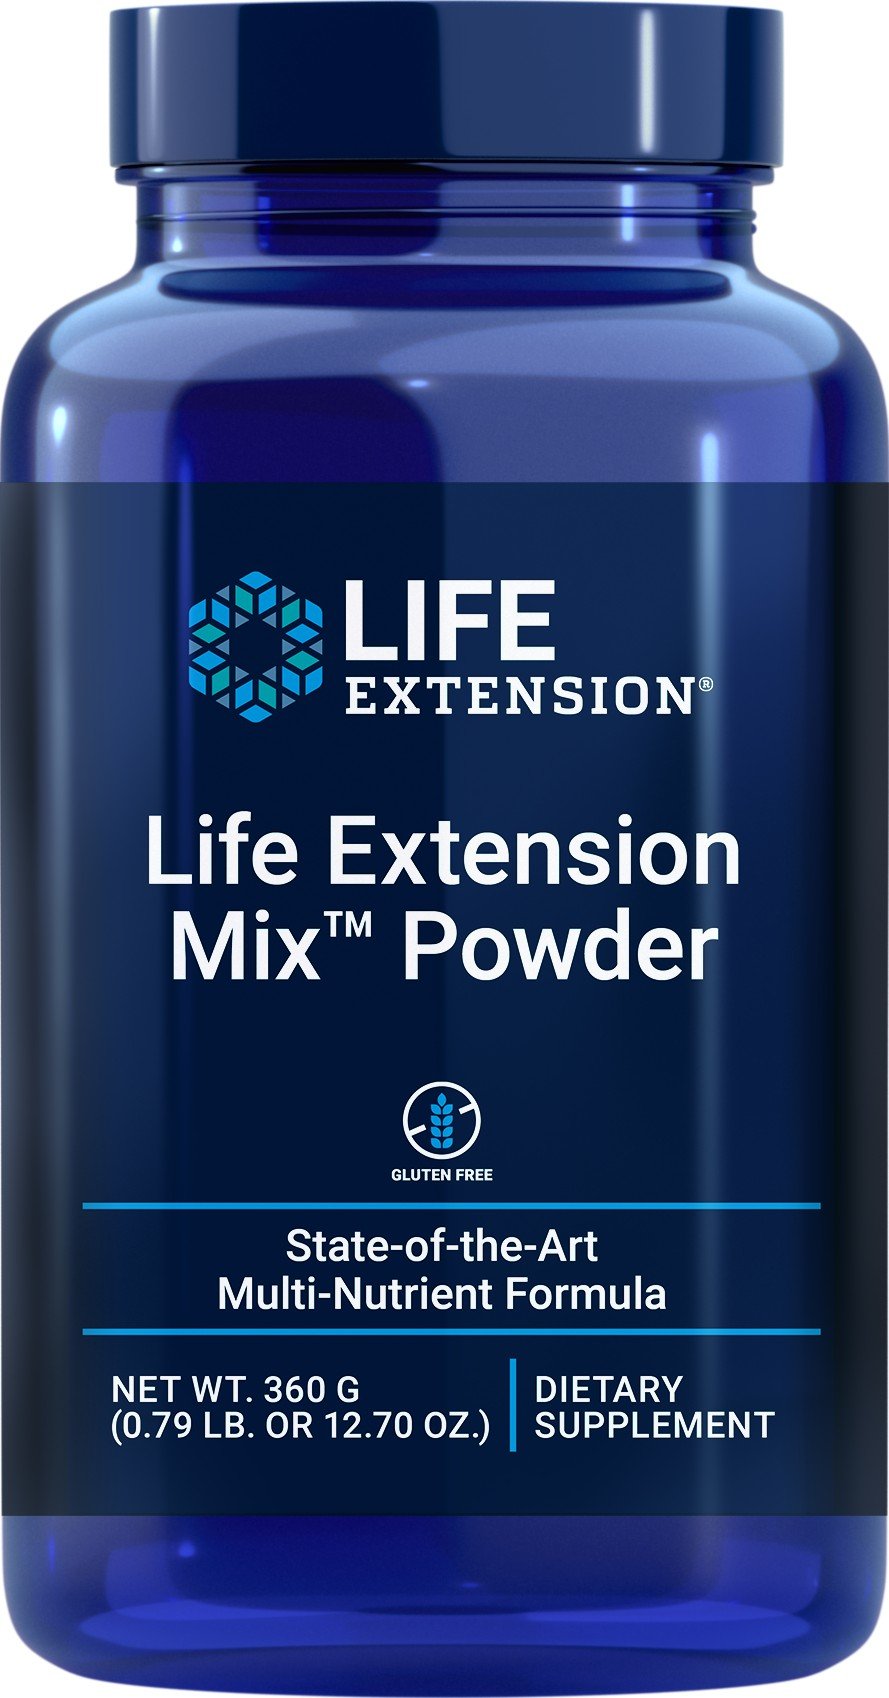 Life Extension Life Extension Mix Powder 360 g (0.79 lb) Powder